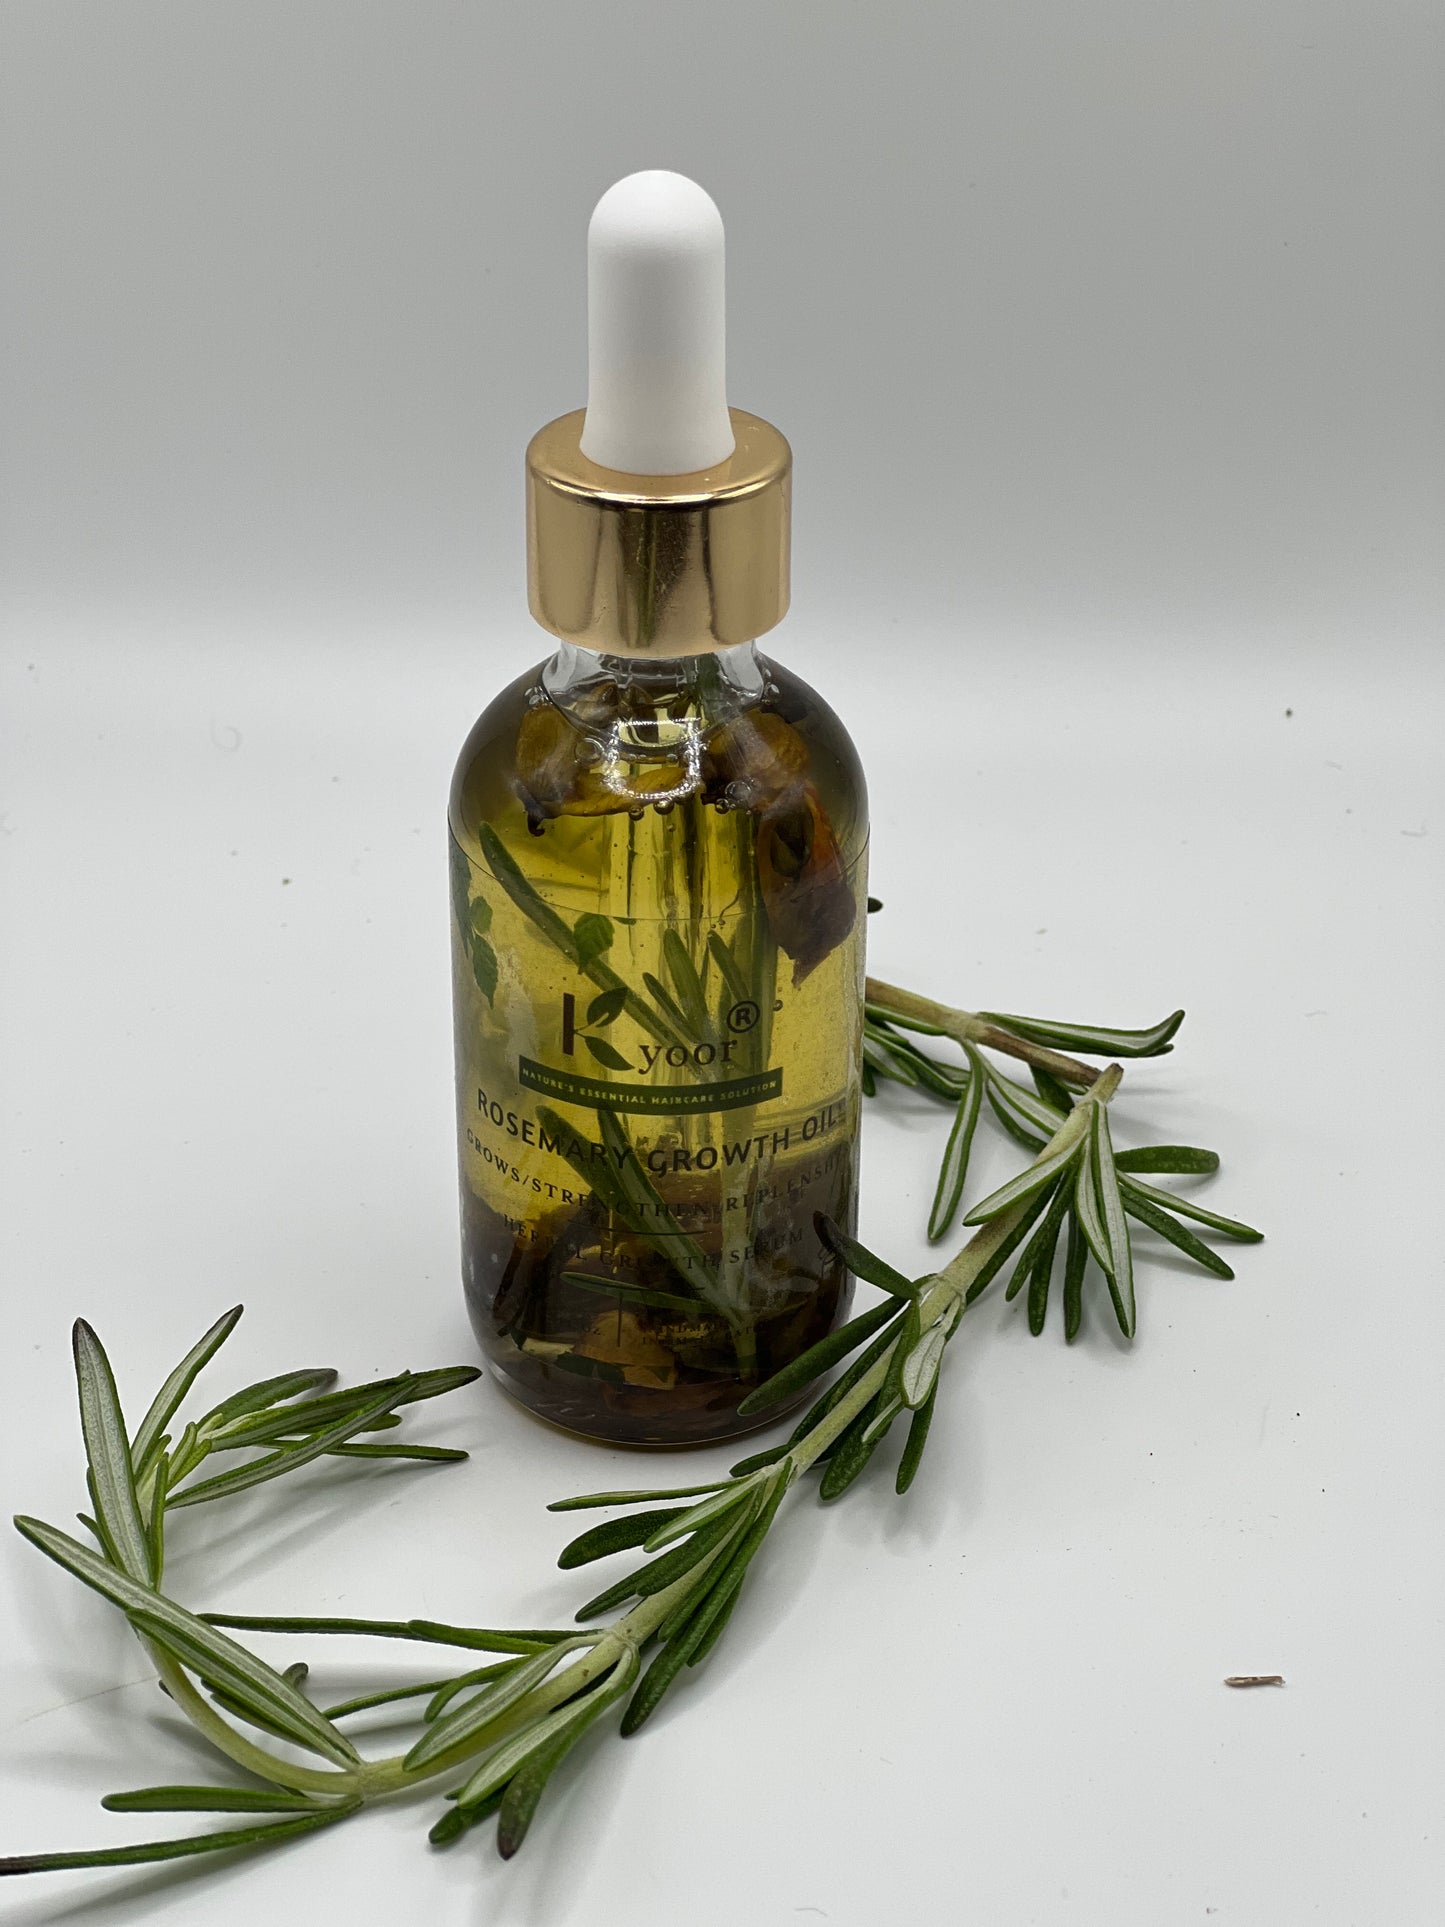 Rosemary Growth Oil